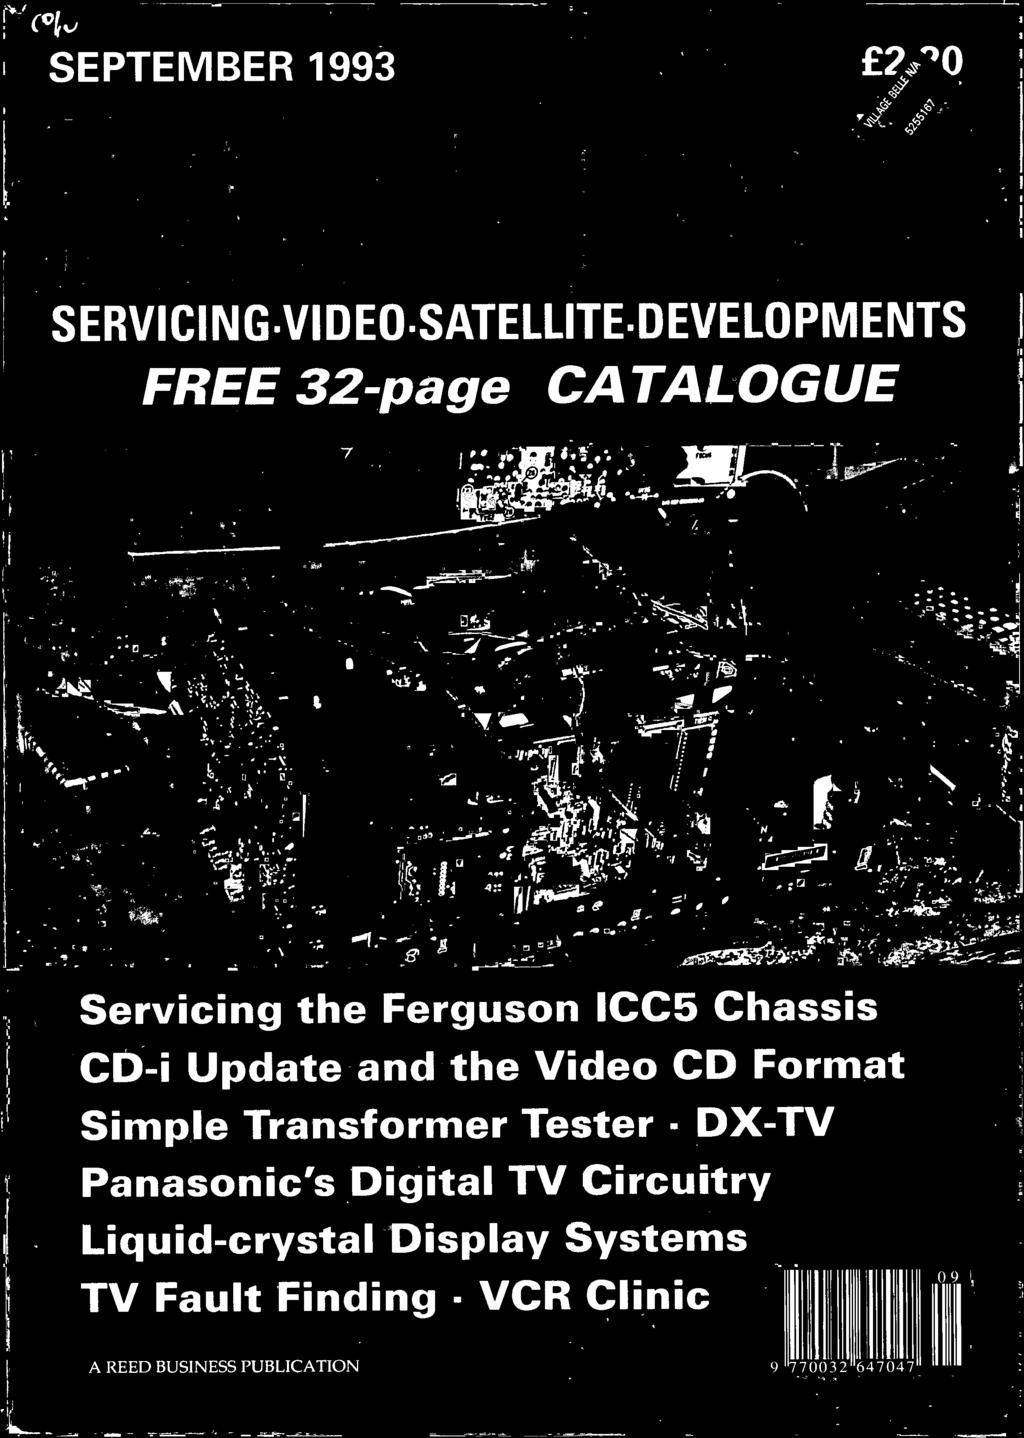 Tester - DX -TV Panasonic's Digital TV Circuitry Liquid